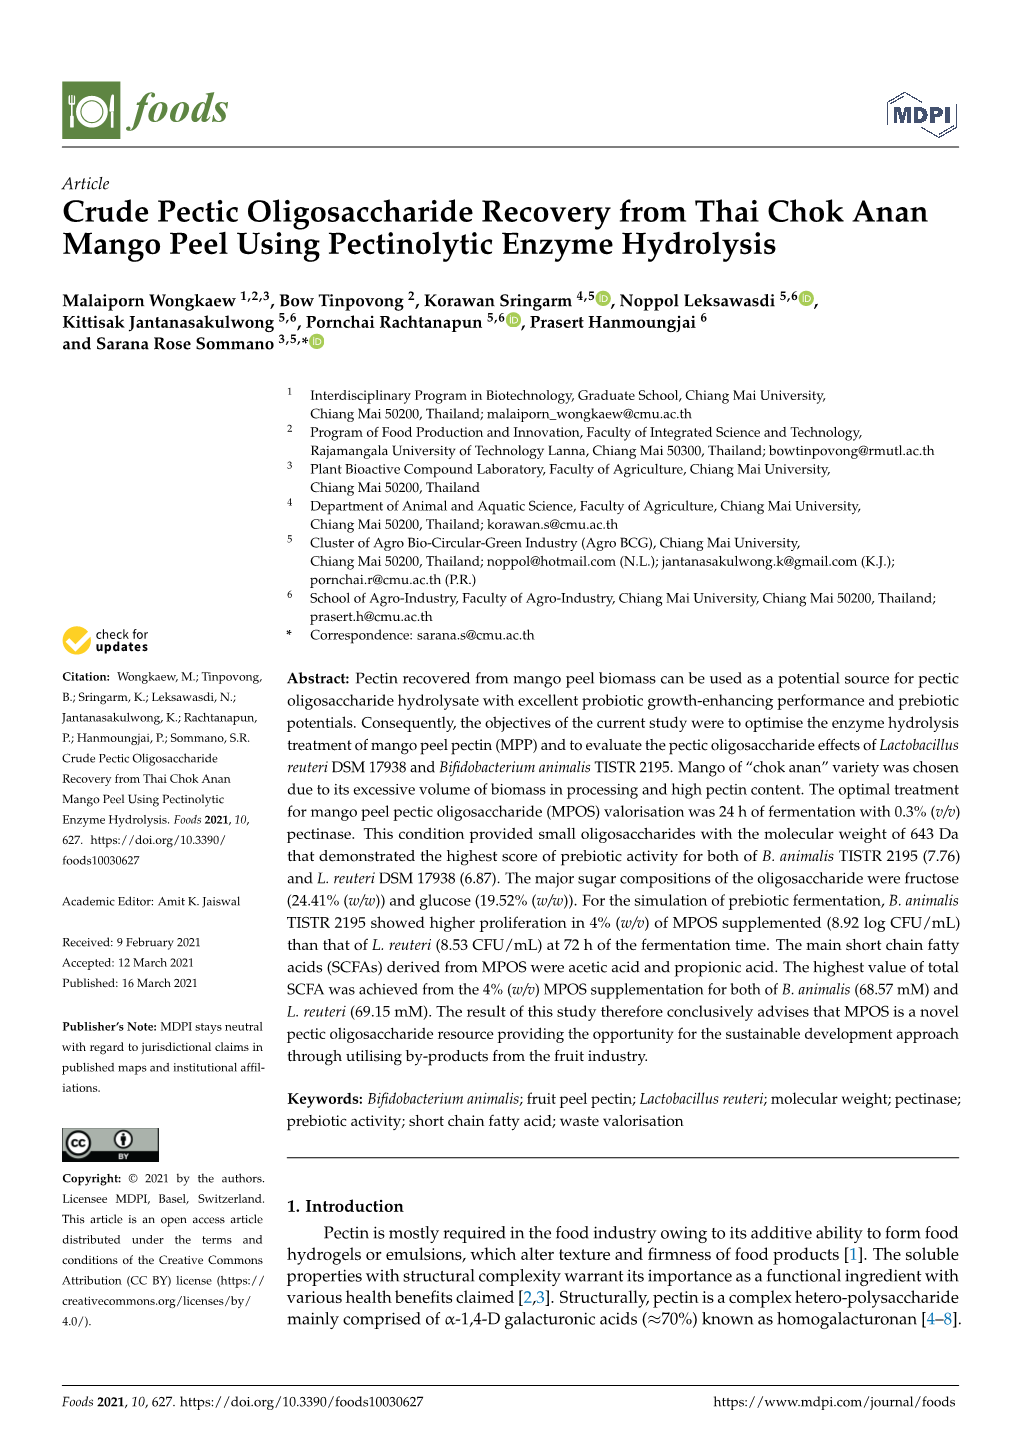 Crude Pectic Oligosaccharide Recovery from Thai Chok Anan Mango Peel Using Pectinolytic Enzyme Hydrolysis